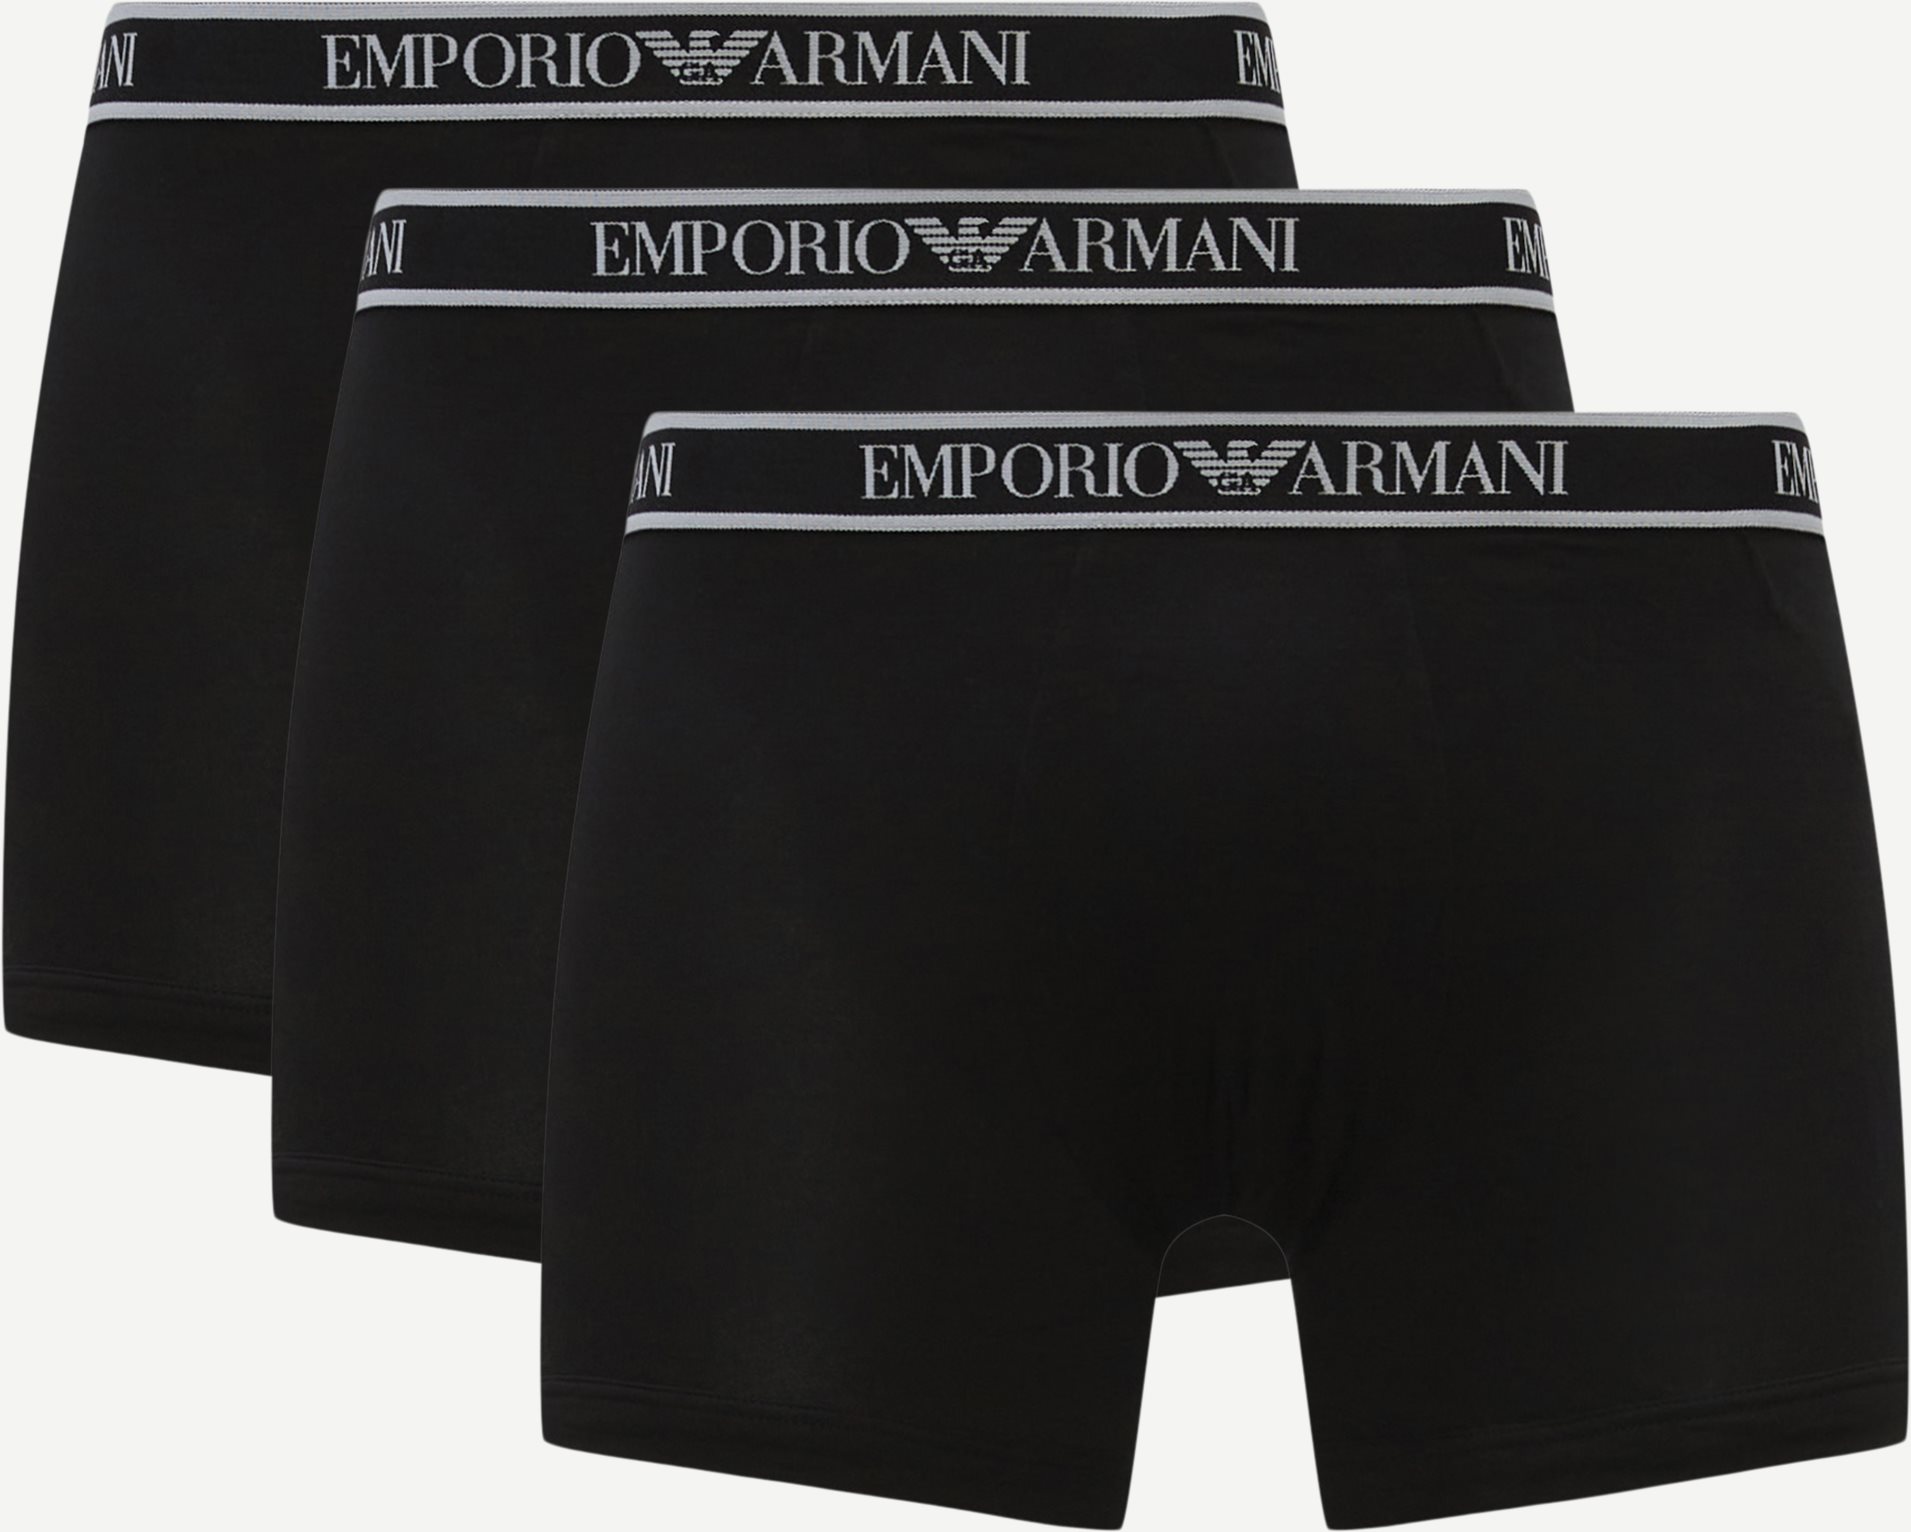 Emporio Armani Underwear 3R717-111473 21320 3 PACK BOXERS Black